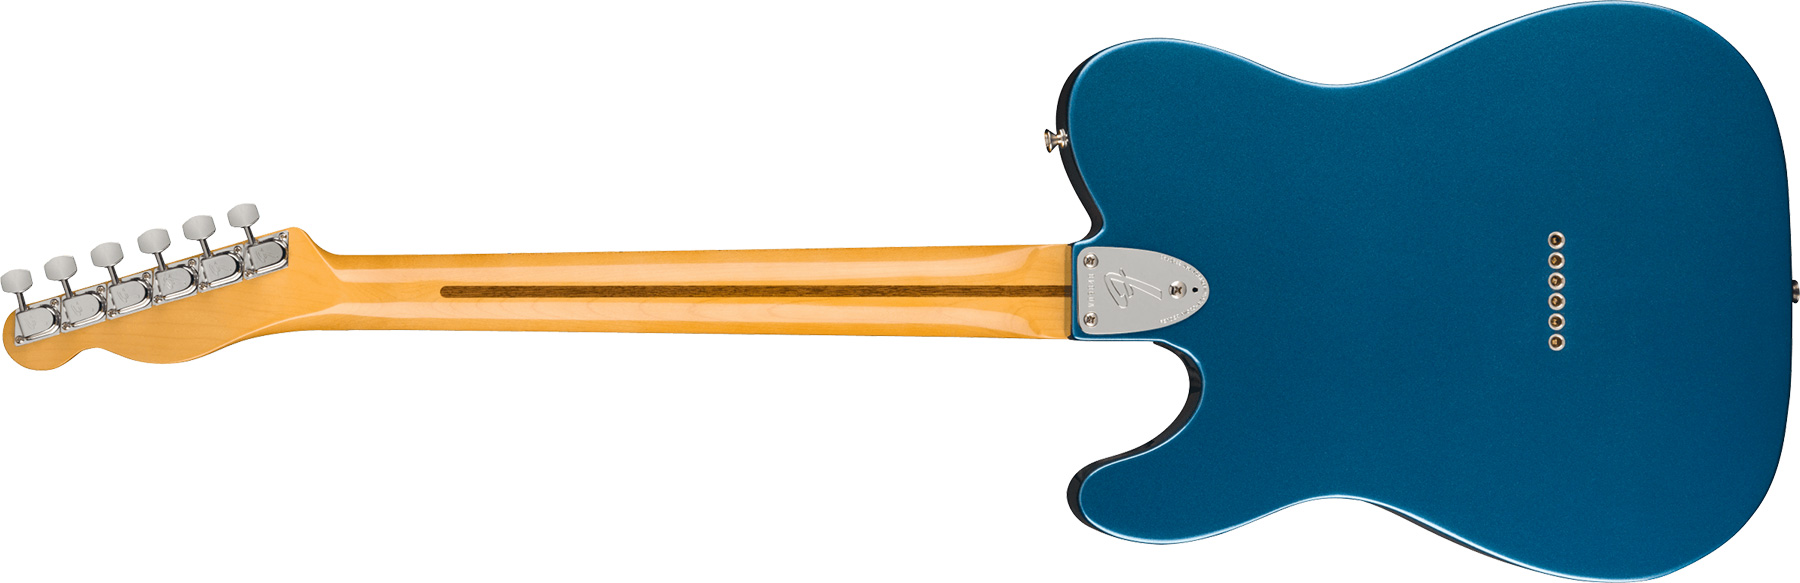 Fender Tele Thinline 1972 American Vintage Ii Usa 2h Ht Mn - Lake Placid Blue - Tel shape electric guitar - Variation 1